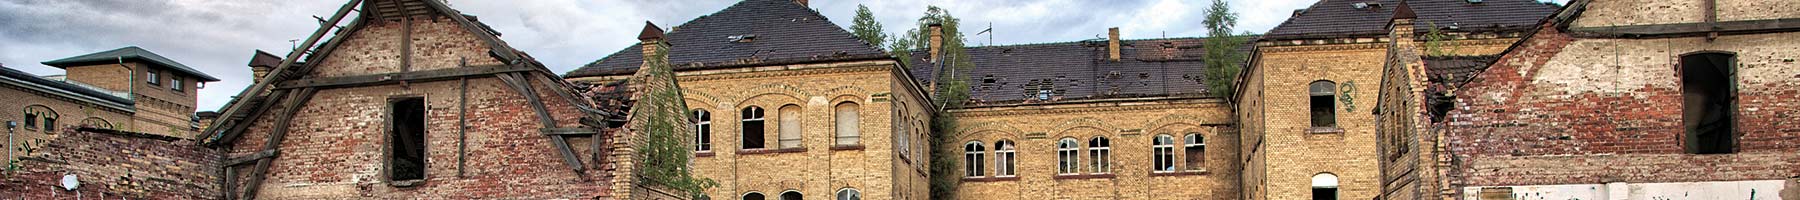 derelict buildings in Leipzig, Germany